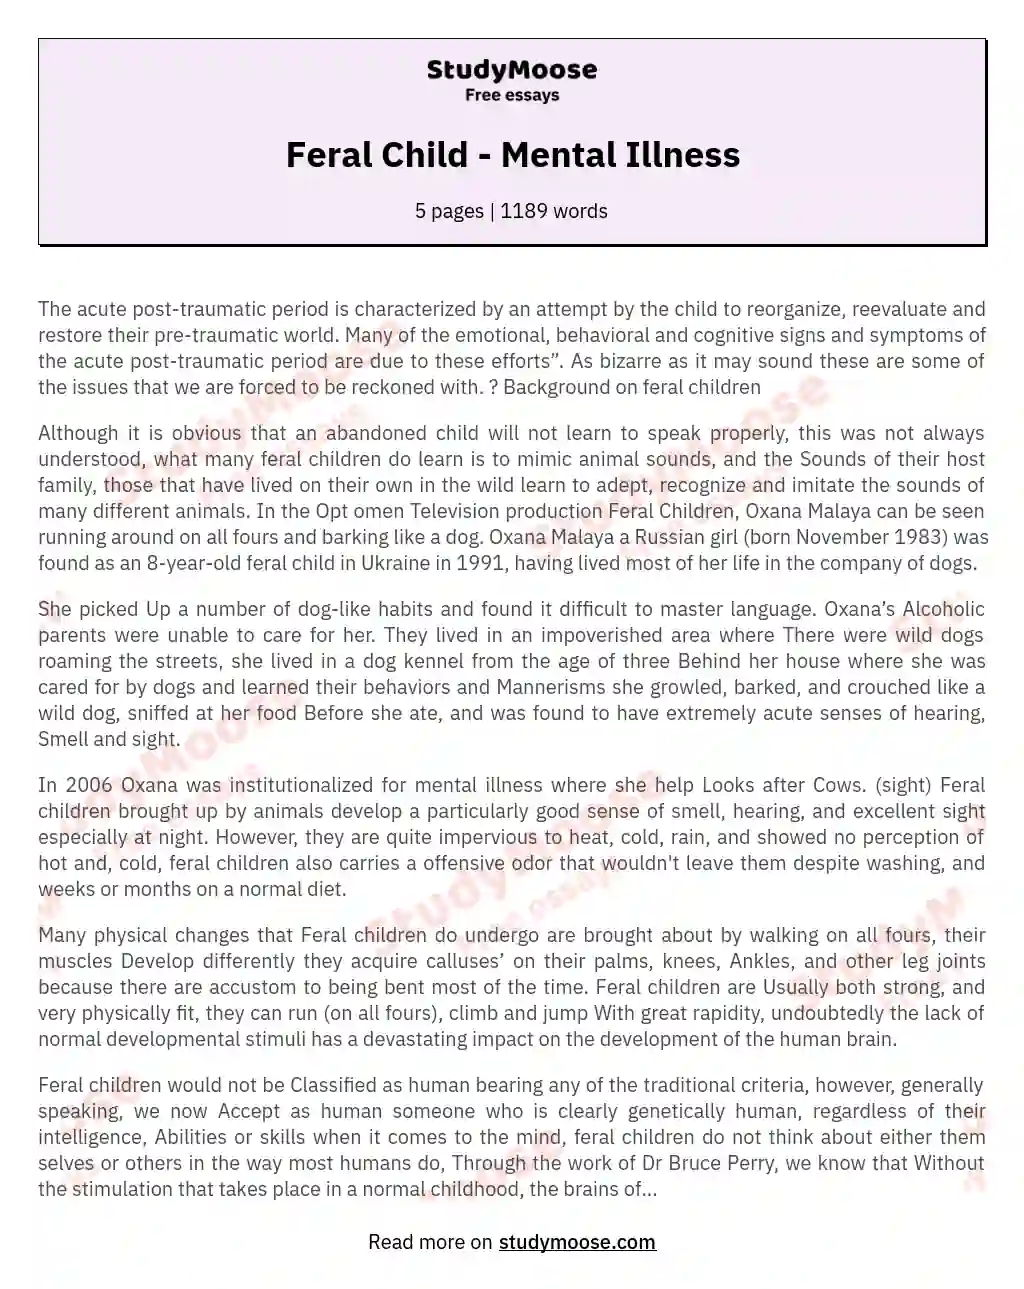 Feral Child - Mental Illness essay